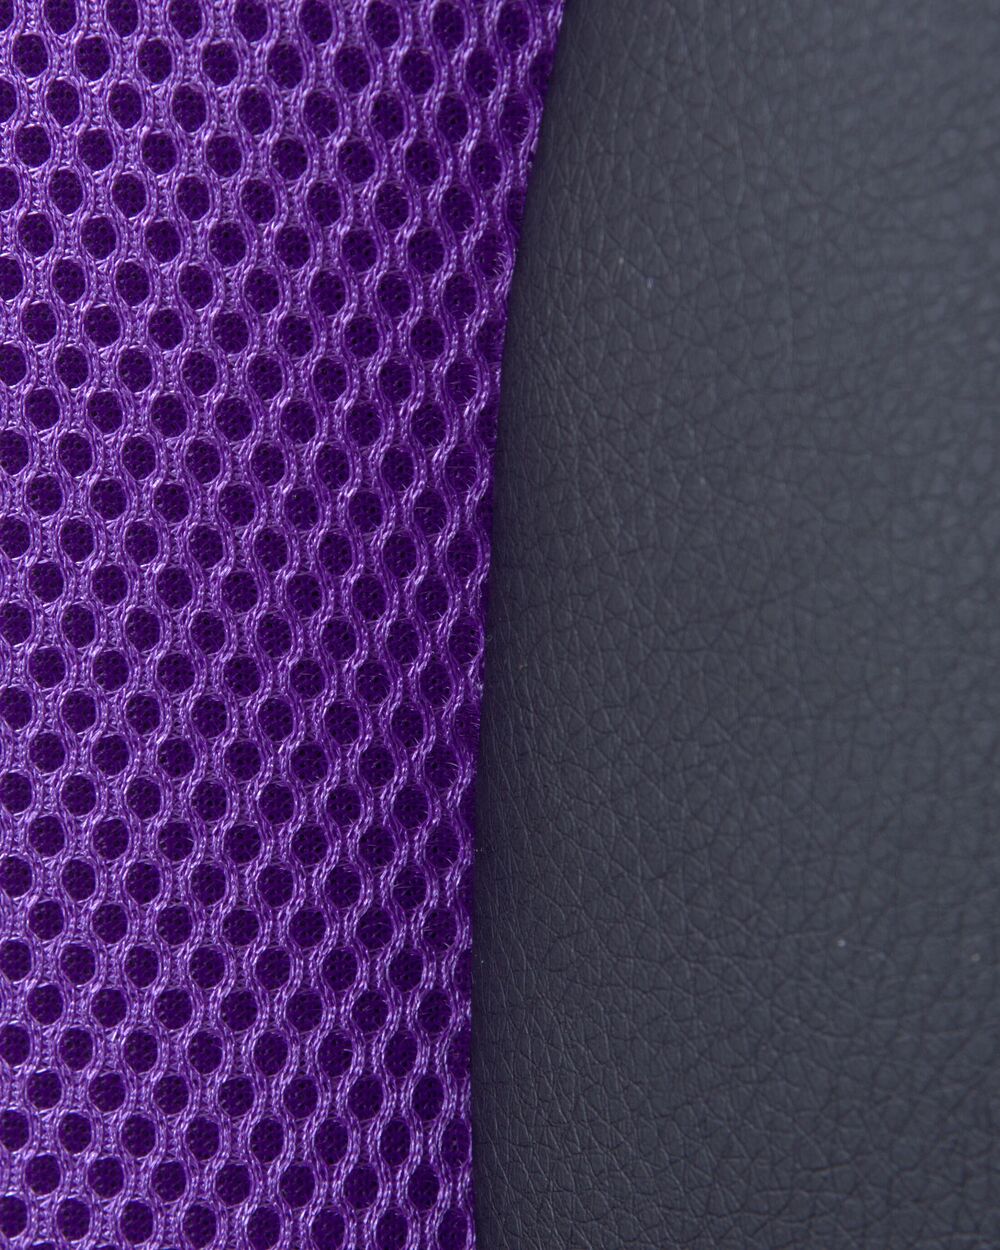 Tabouret de bureau design en tissu violet Body